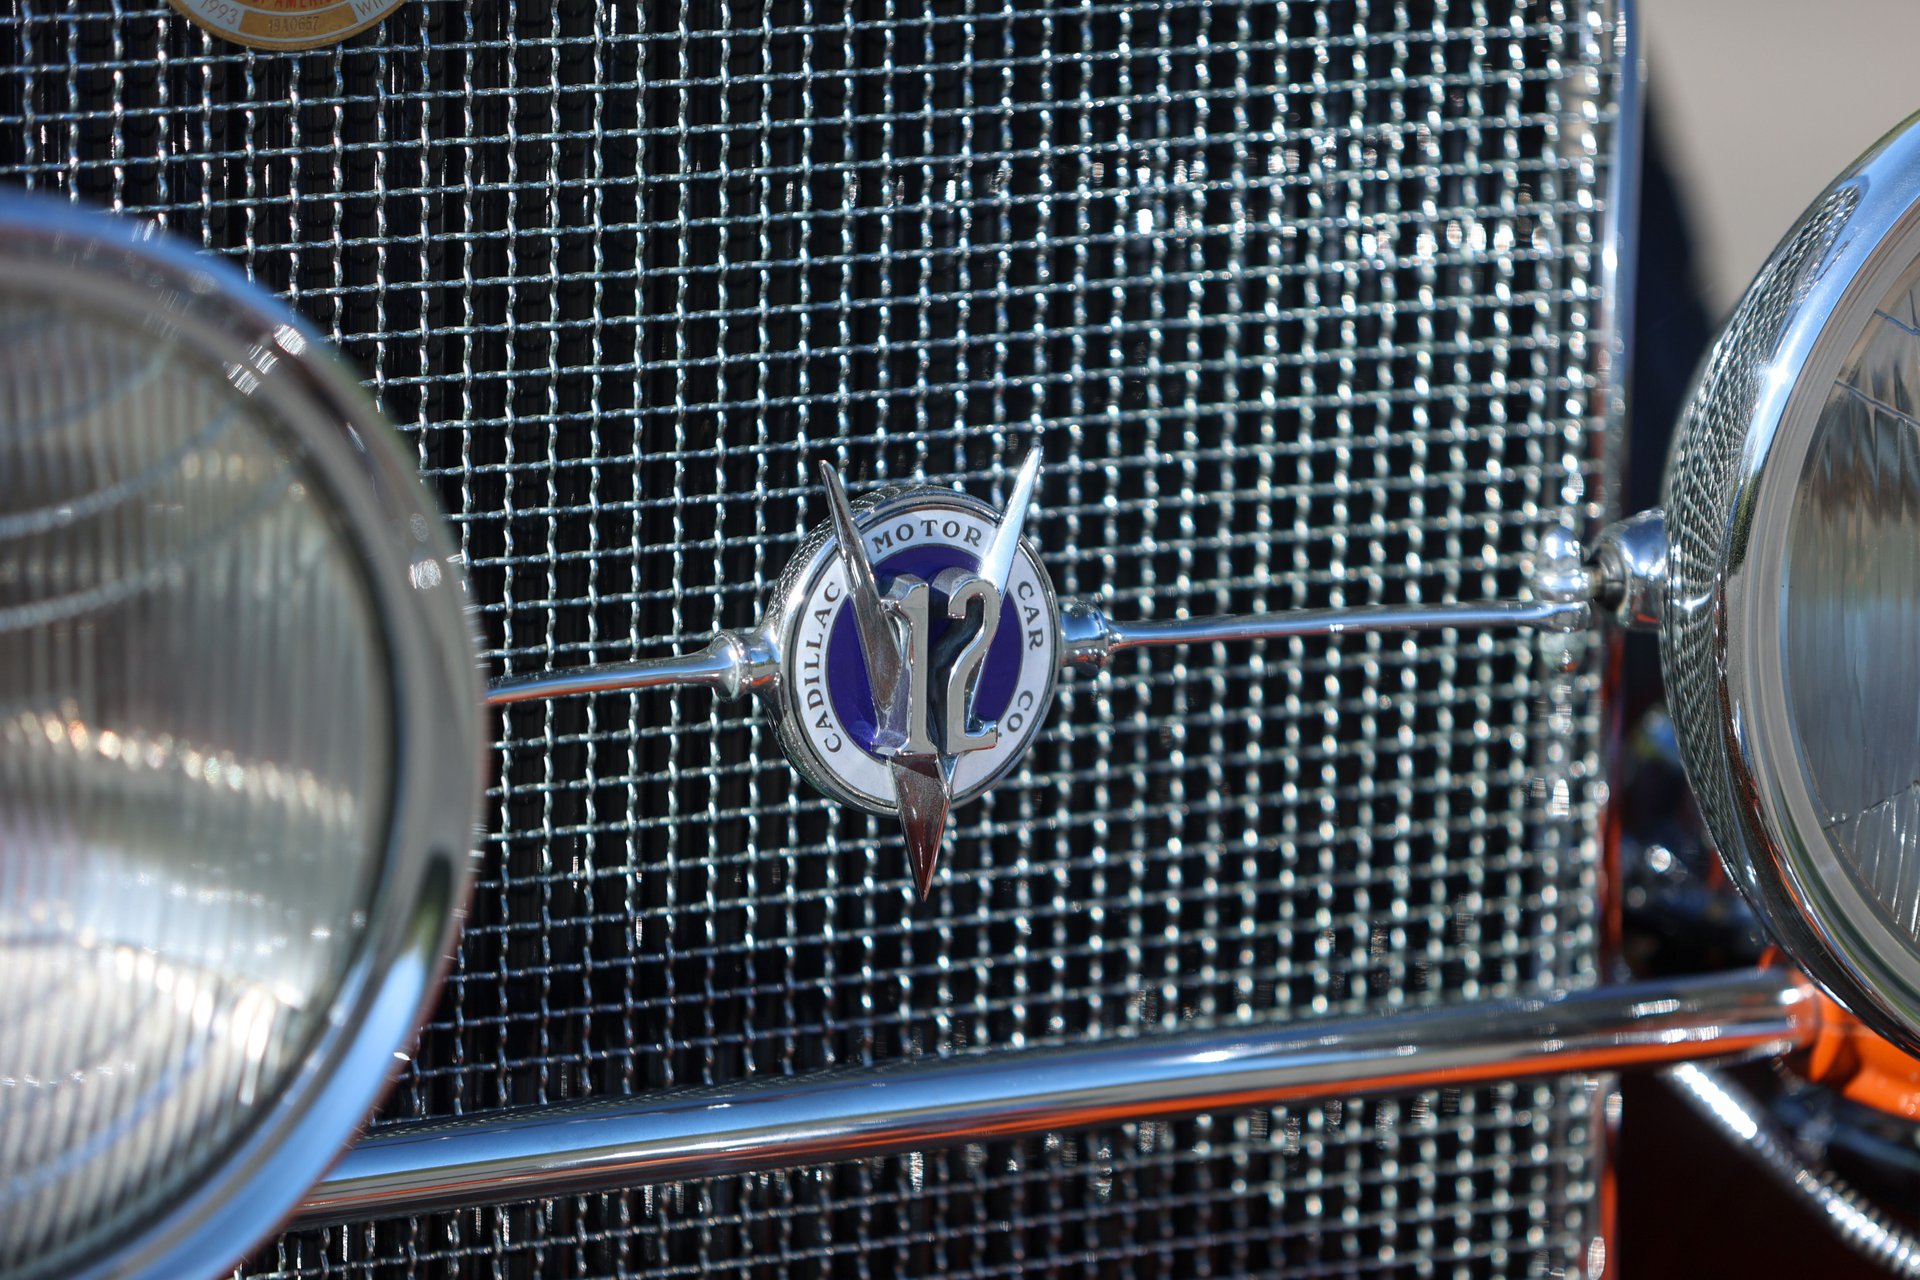 For Sale 1931 Cadillac Model 370A V-12 Sport Phaeton